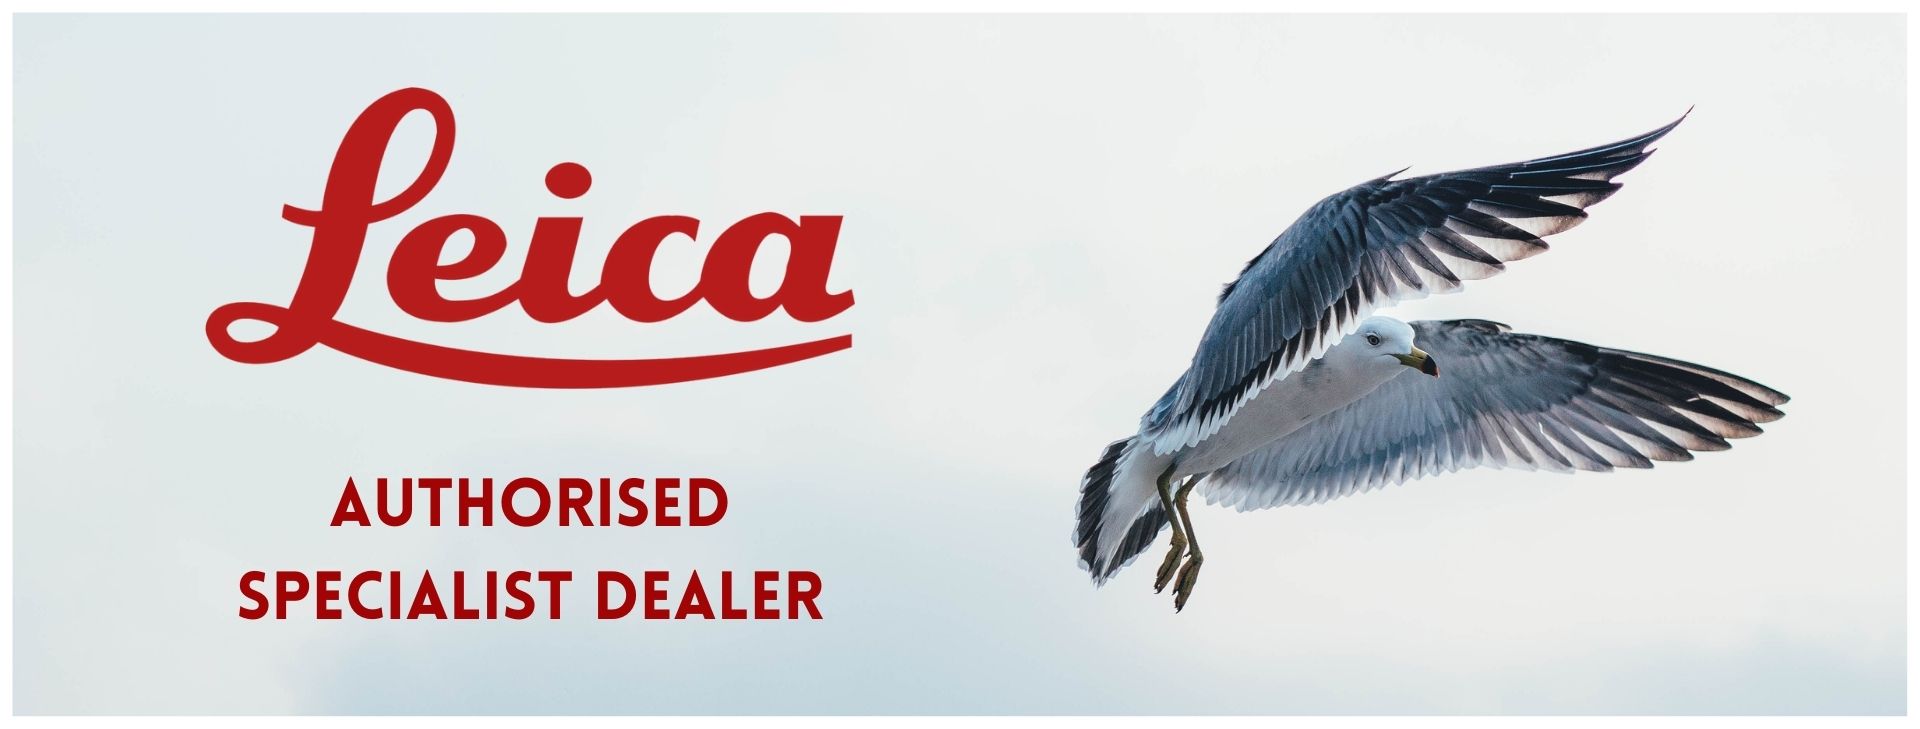 ace optics is a leica authorised dealer bird picture